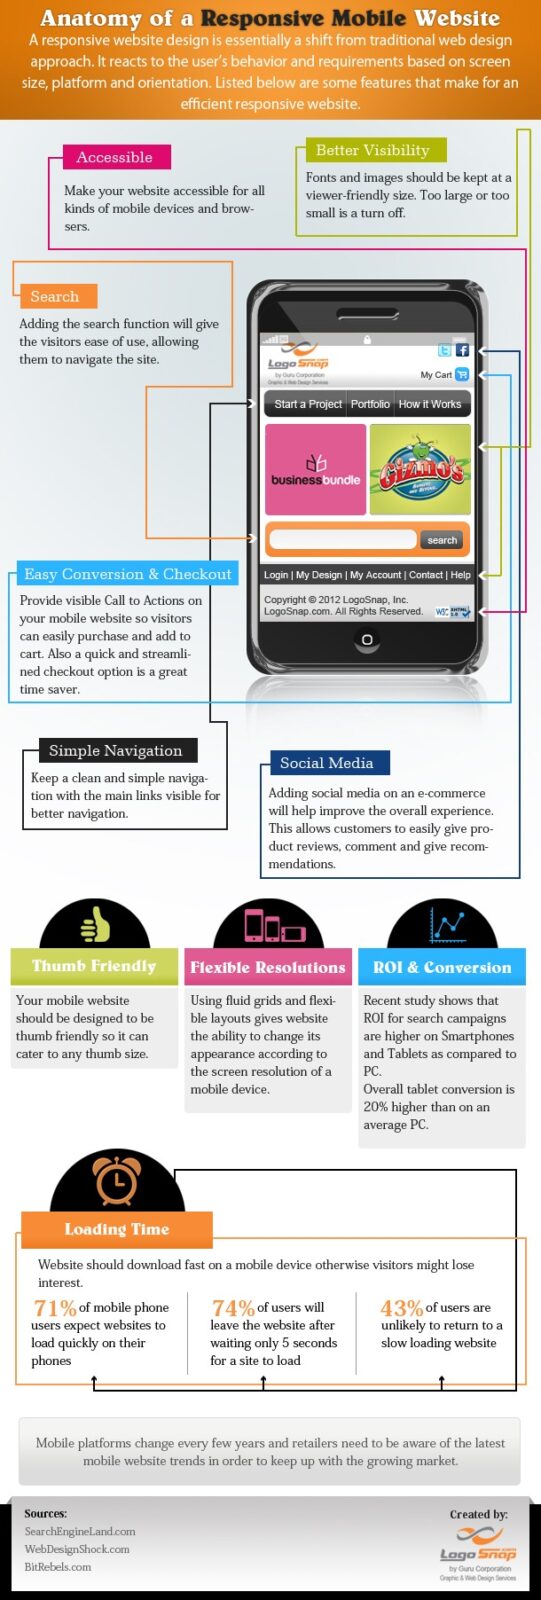 responsive website infographic - Anatomy of a Mobile Website Design